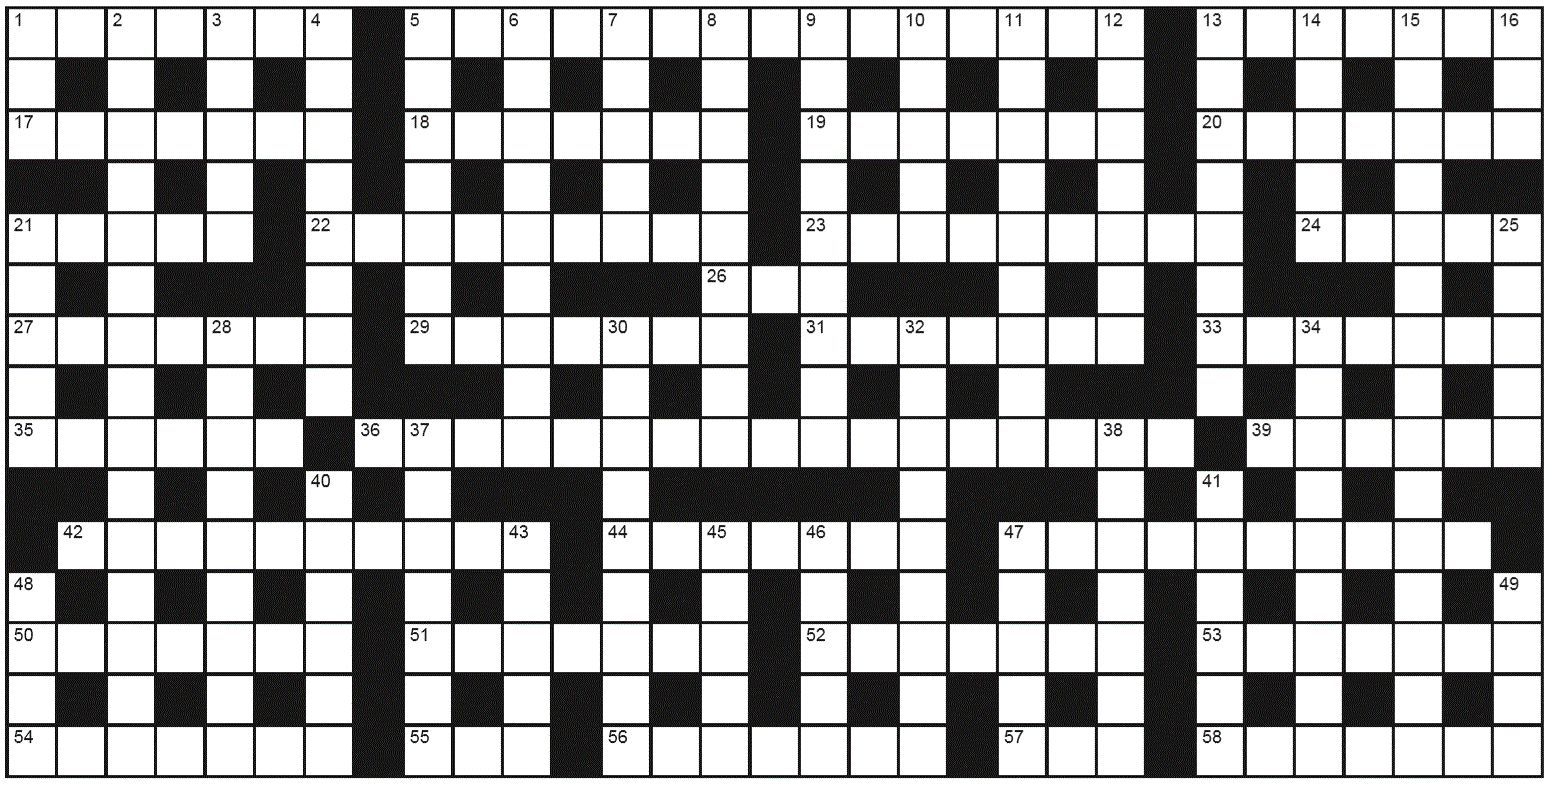 Toughie 2898 – Big Dave's Crossword Blog